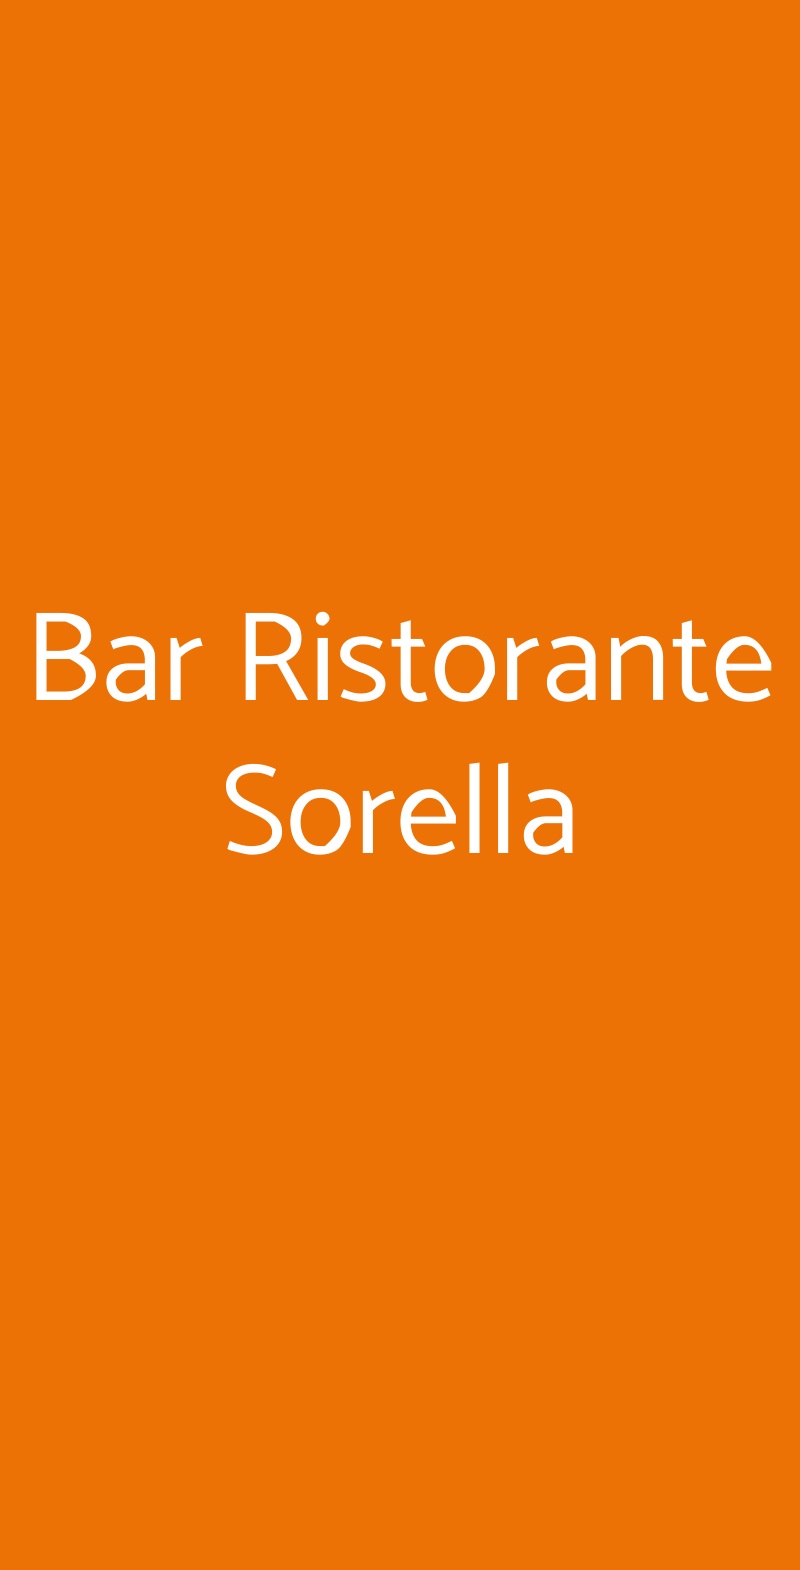 Bar Ristorante Sorella Albignasego menù 1 pagina